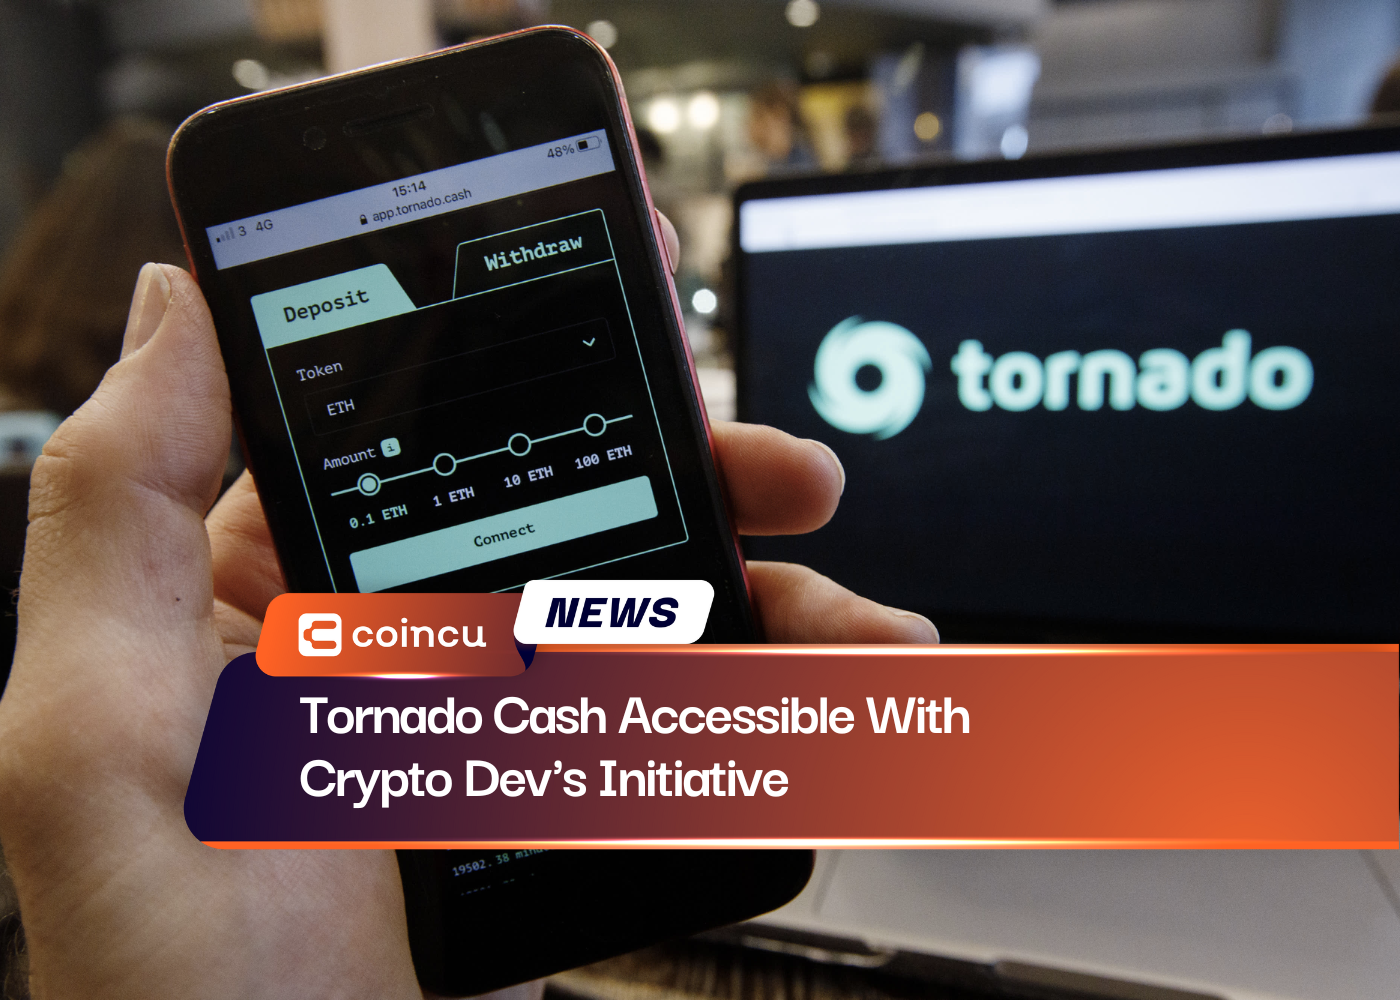 Tornado Cash Accessible With Crypto Dev's Initiative